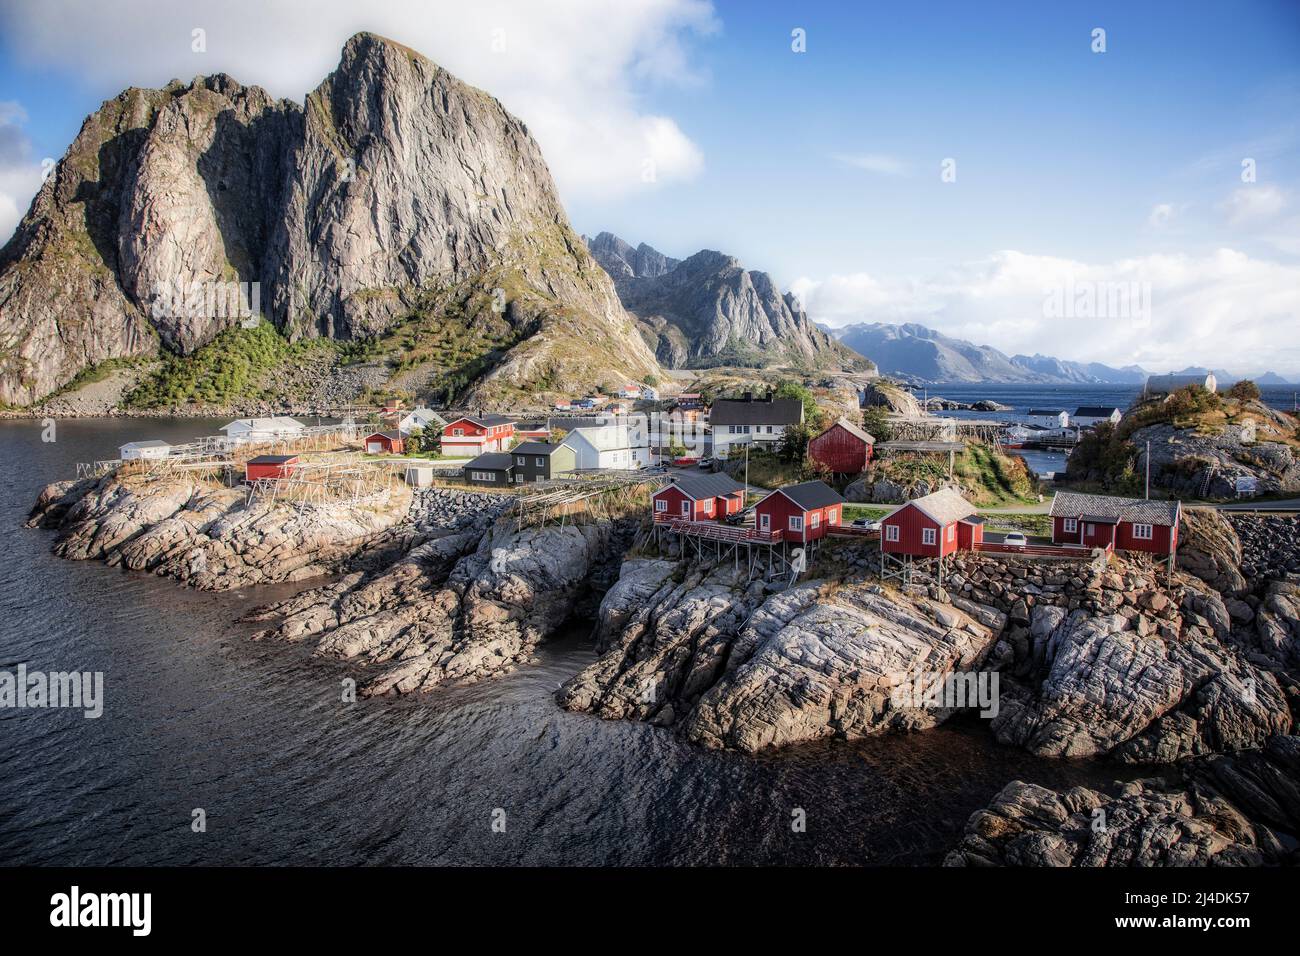 The village of Hamnoy on the island of Moskenesoya, Lofoten Islands, Norway. Stock Photo